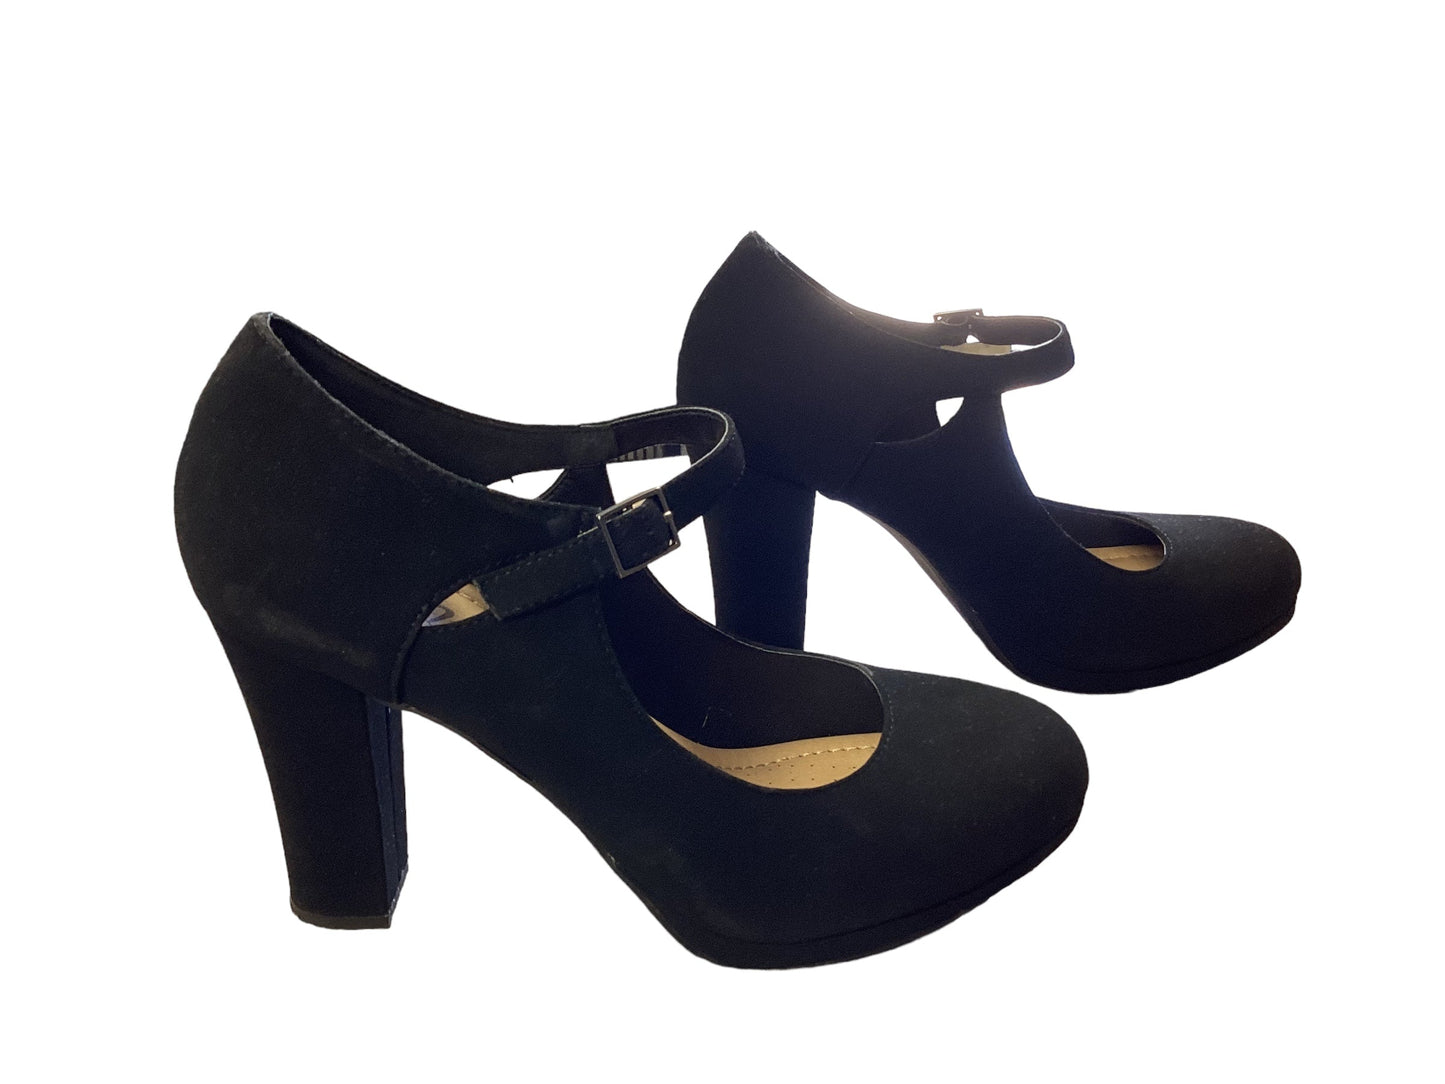 Black Shoes Heels Block Clothes Mentor, Size 11